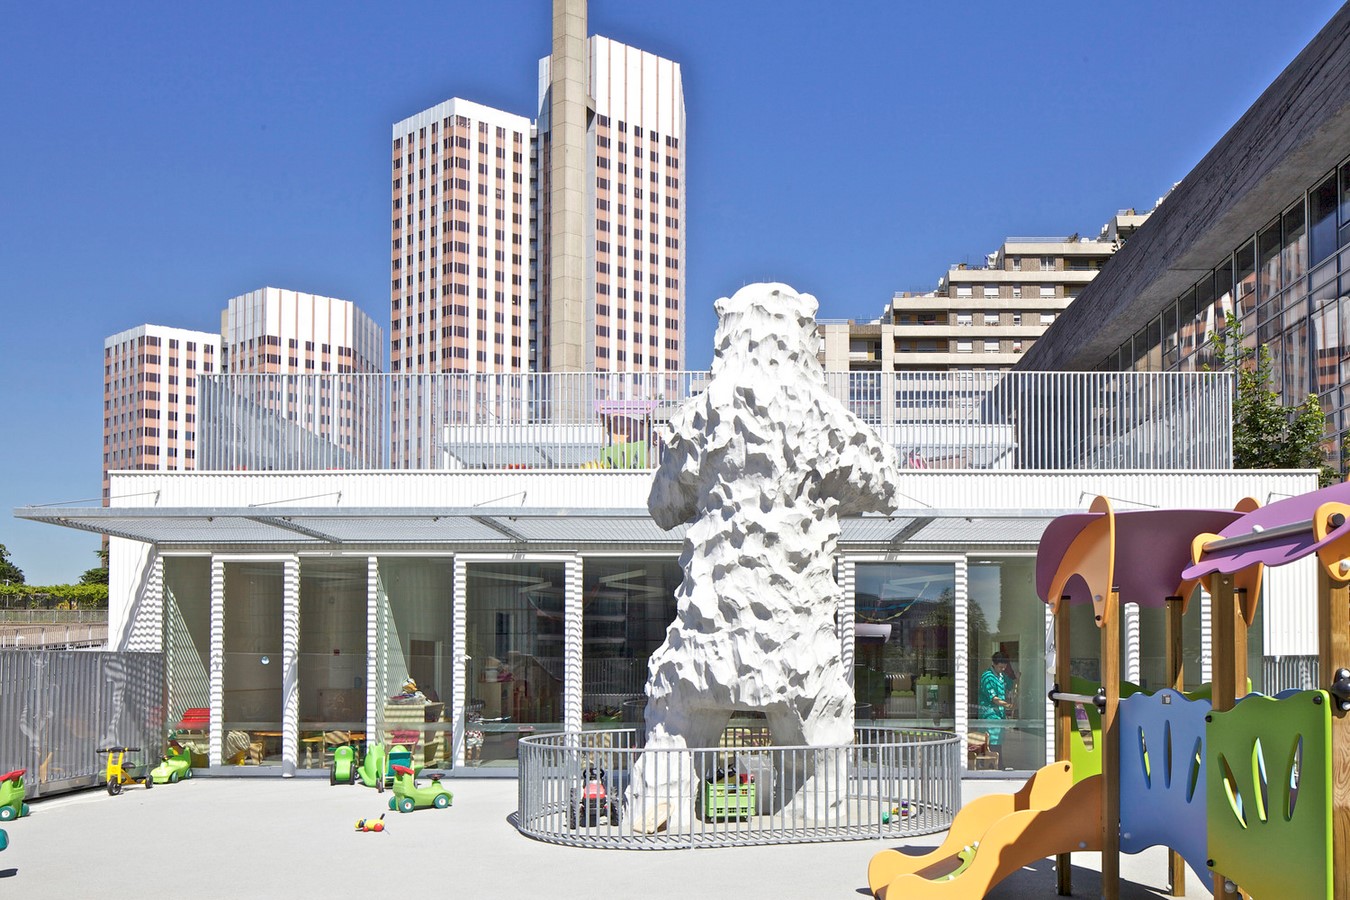 Giraffe Childcare Center by Hondelatte Laporte Architectes: Storytelling through Architecture - Sheet8